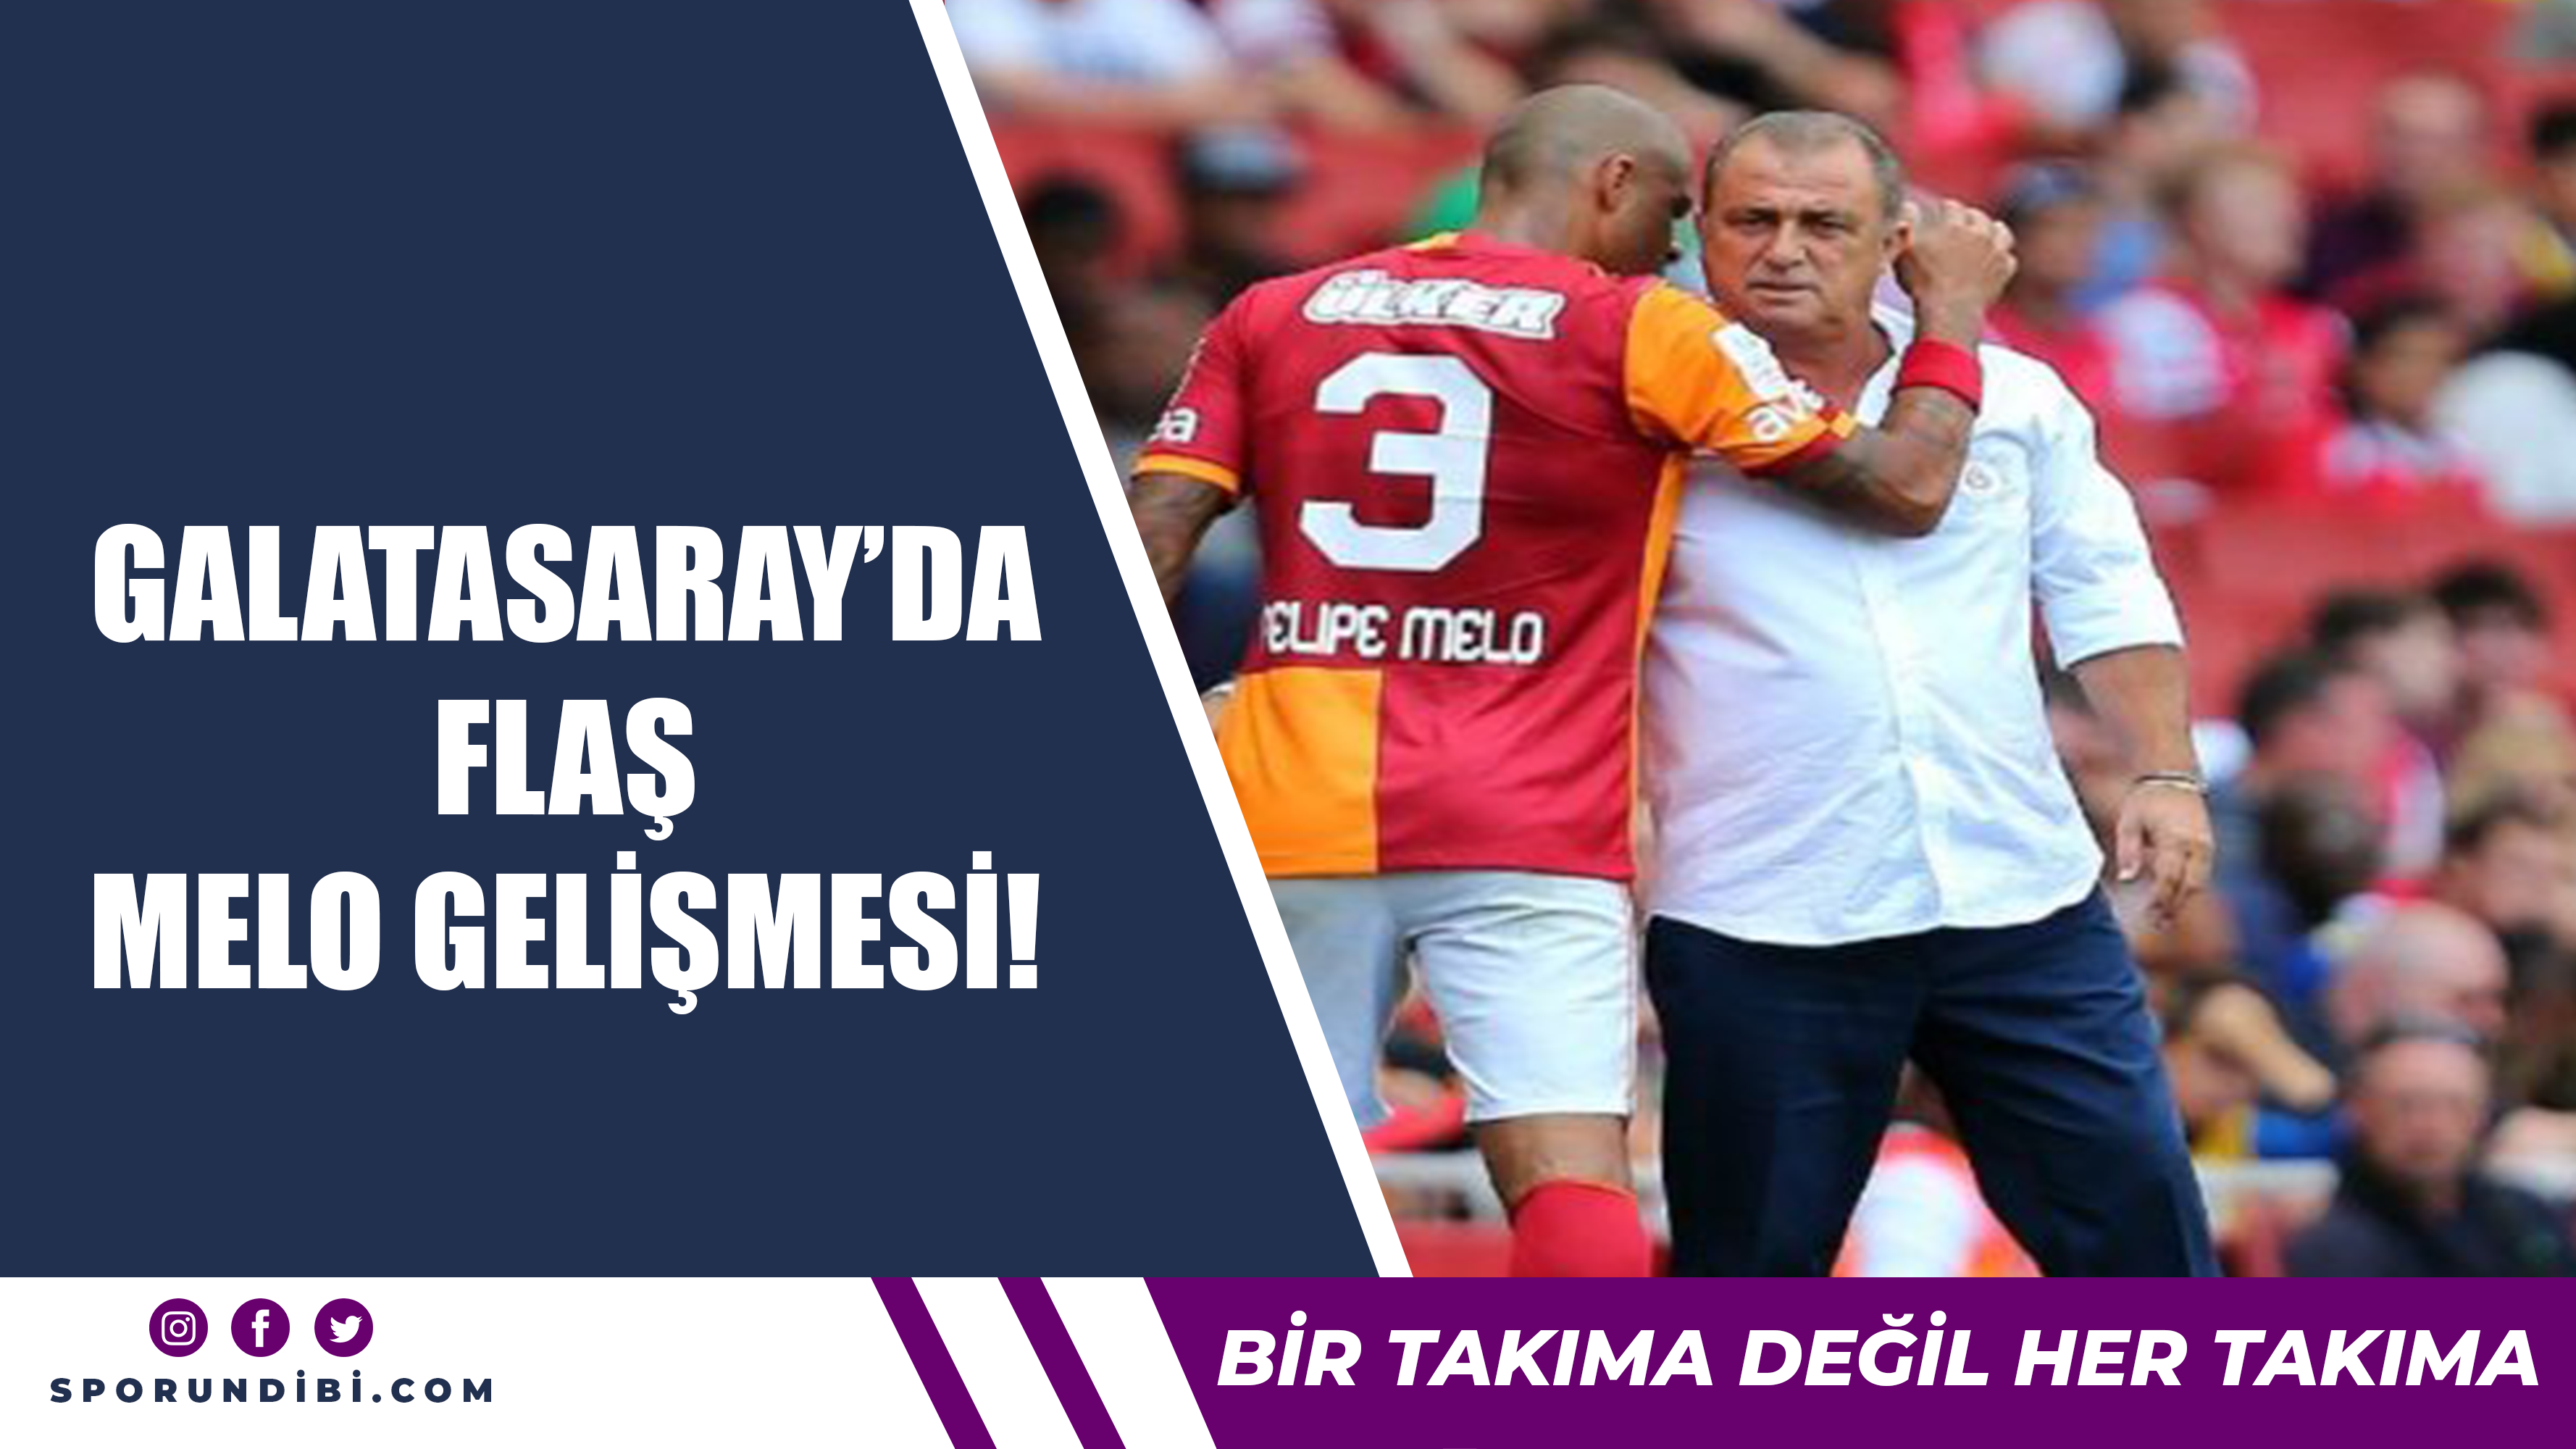 Galatasaray'da flaş Melo gelişmesi!